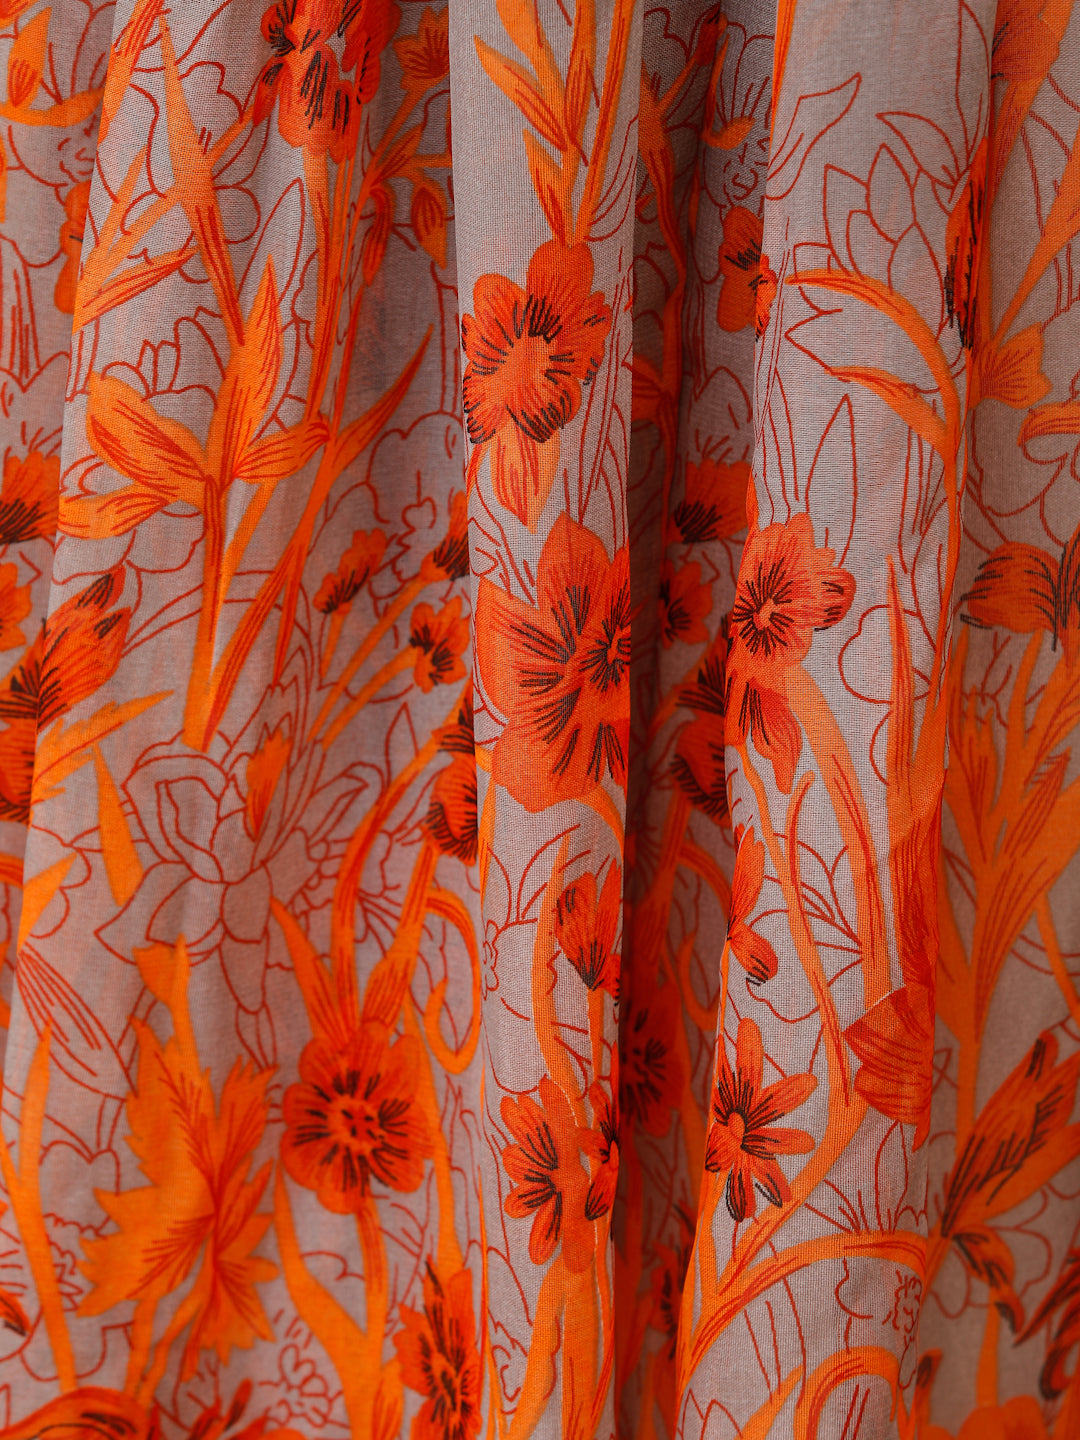 Scorpius Women Grey & Orange Floral Printed Flared Maxi Chiffon Skirt